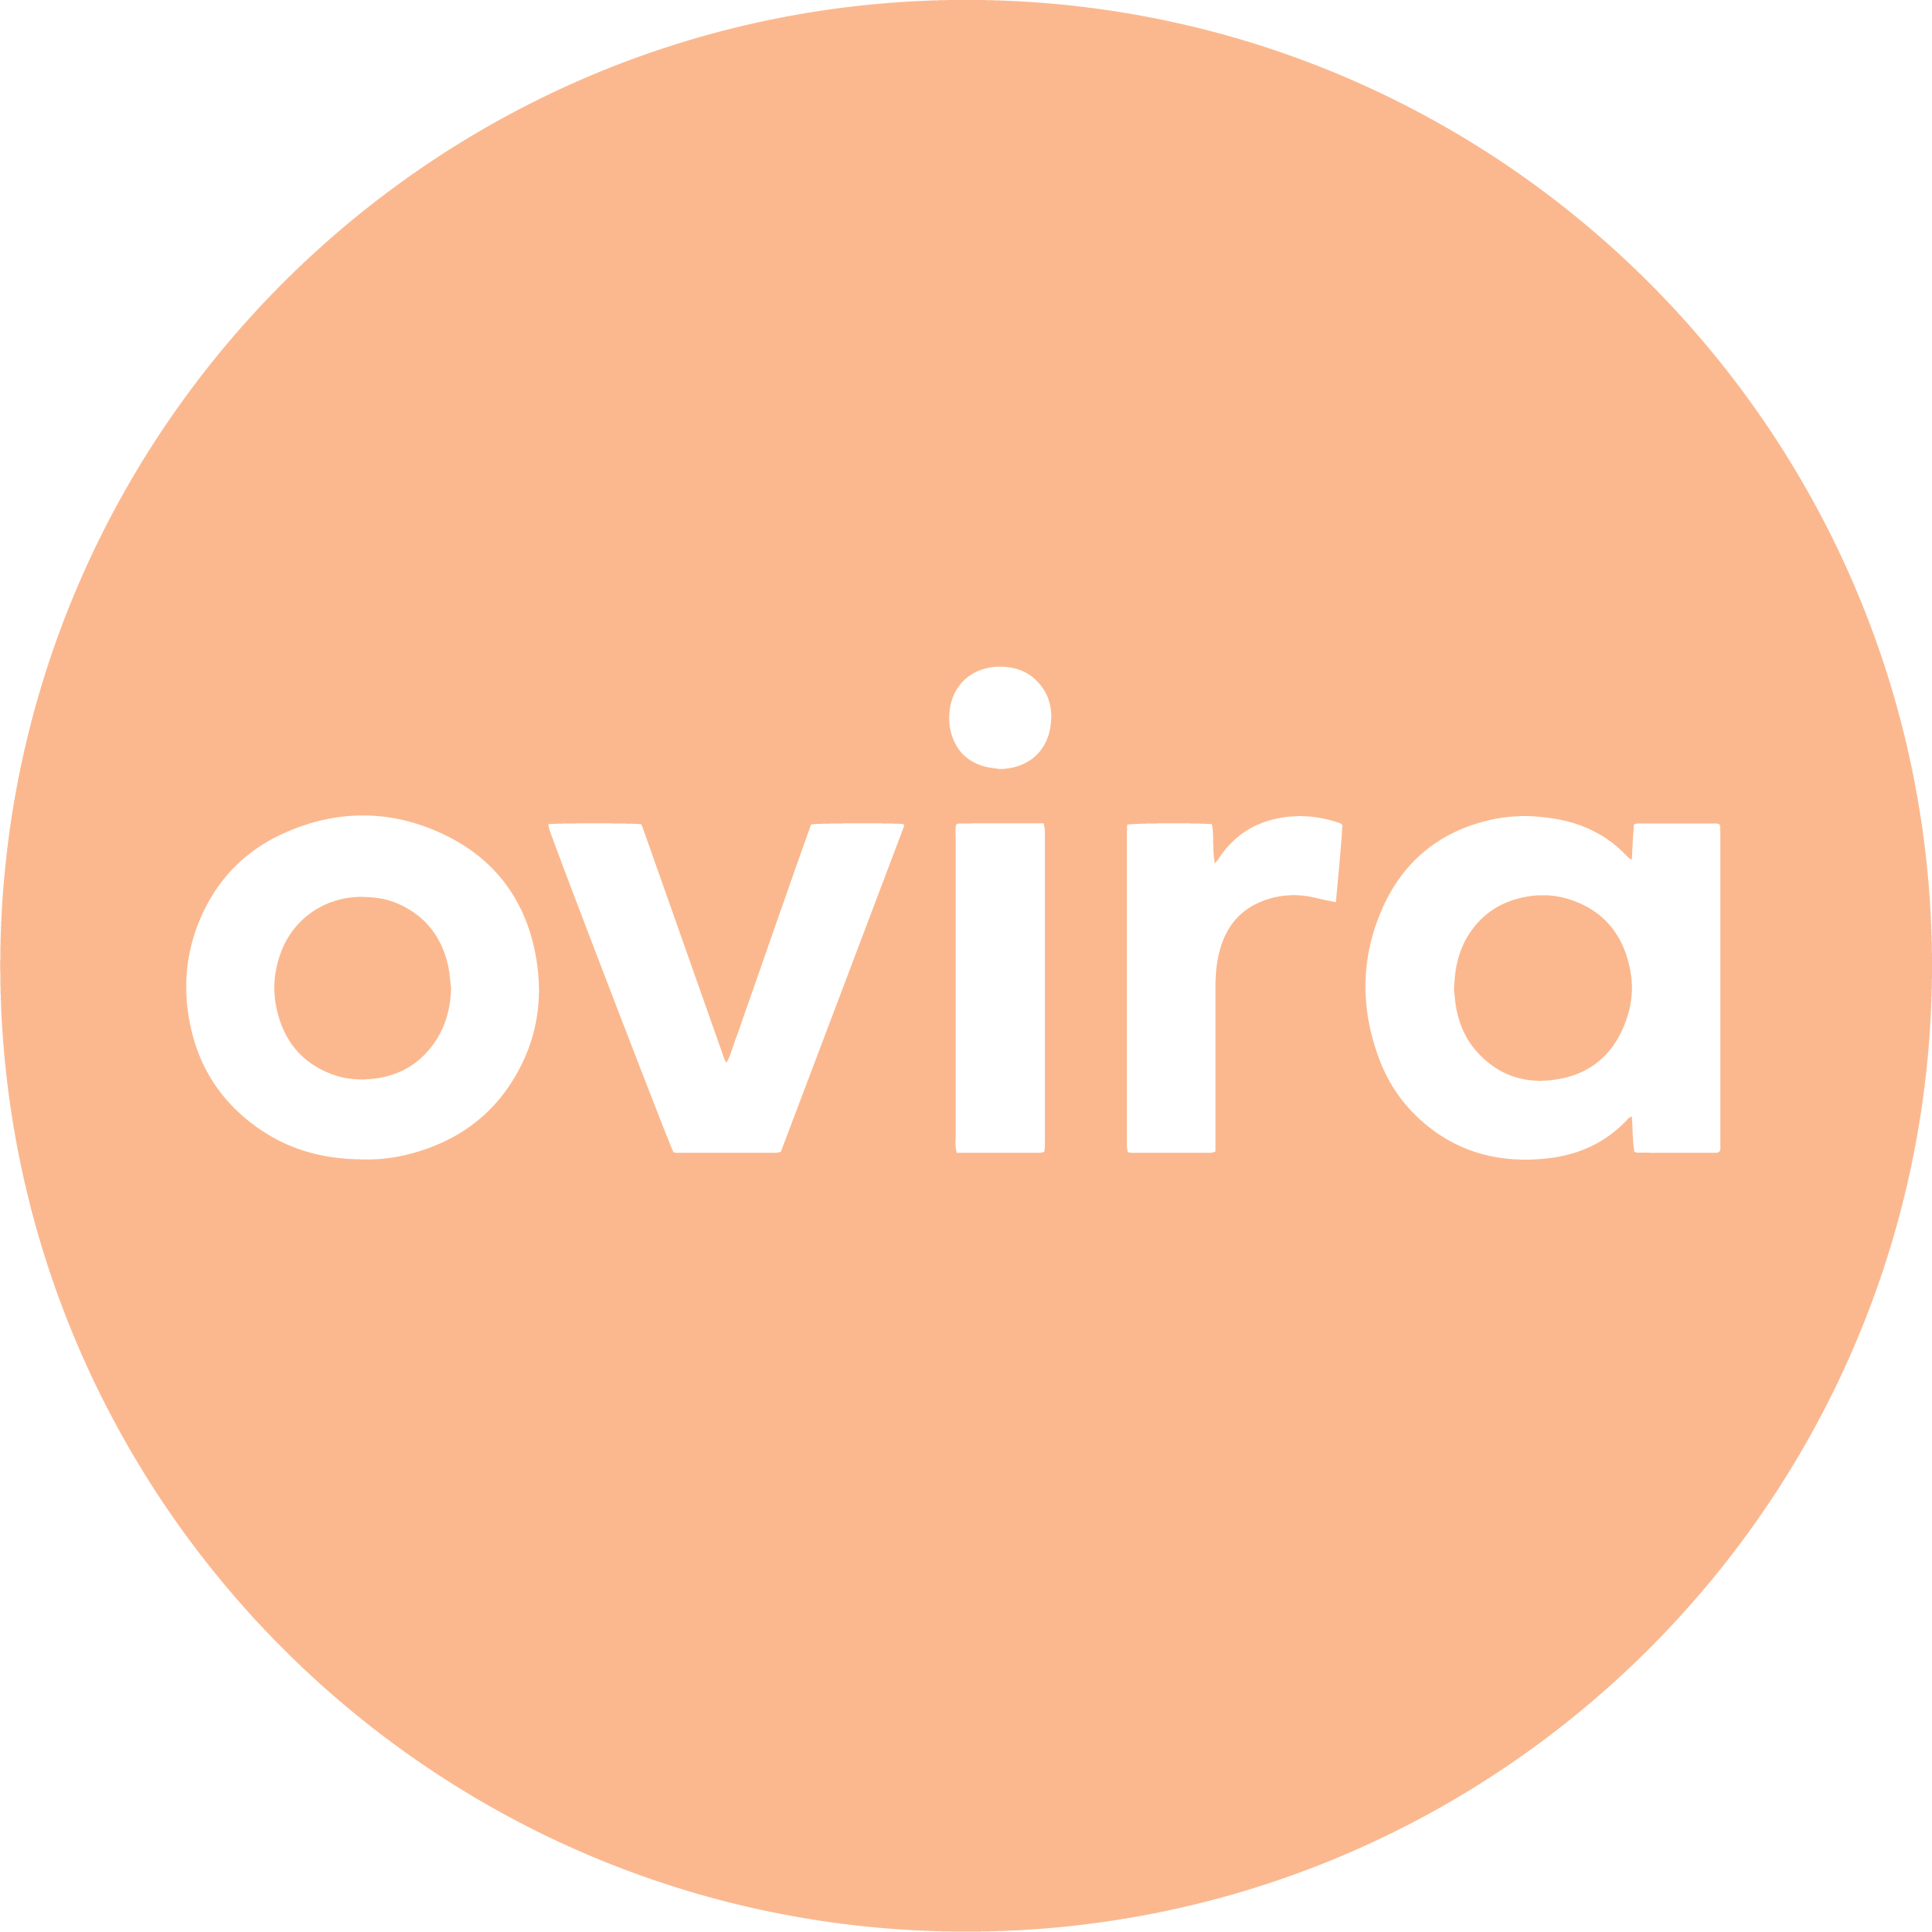 Period Uterus Sticker by Ovira